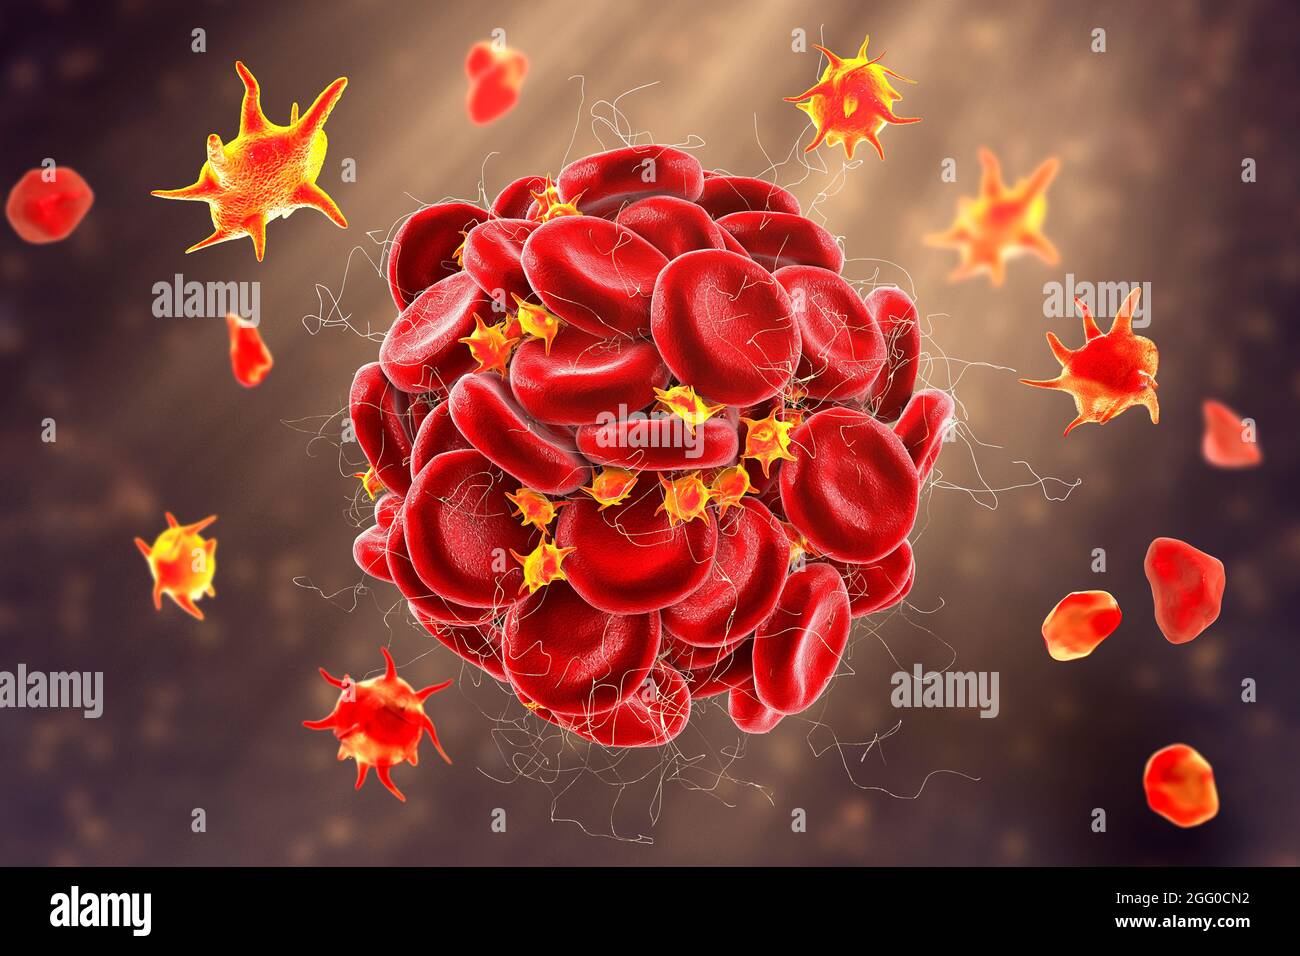 Blood clot, illustration. Stock Photo